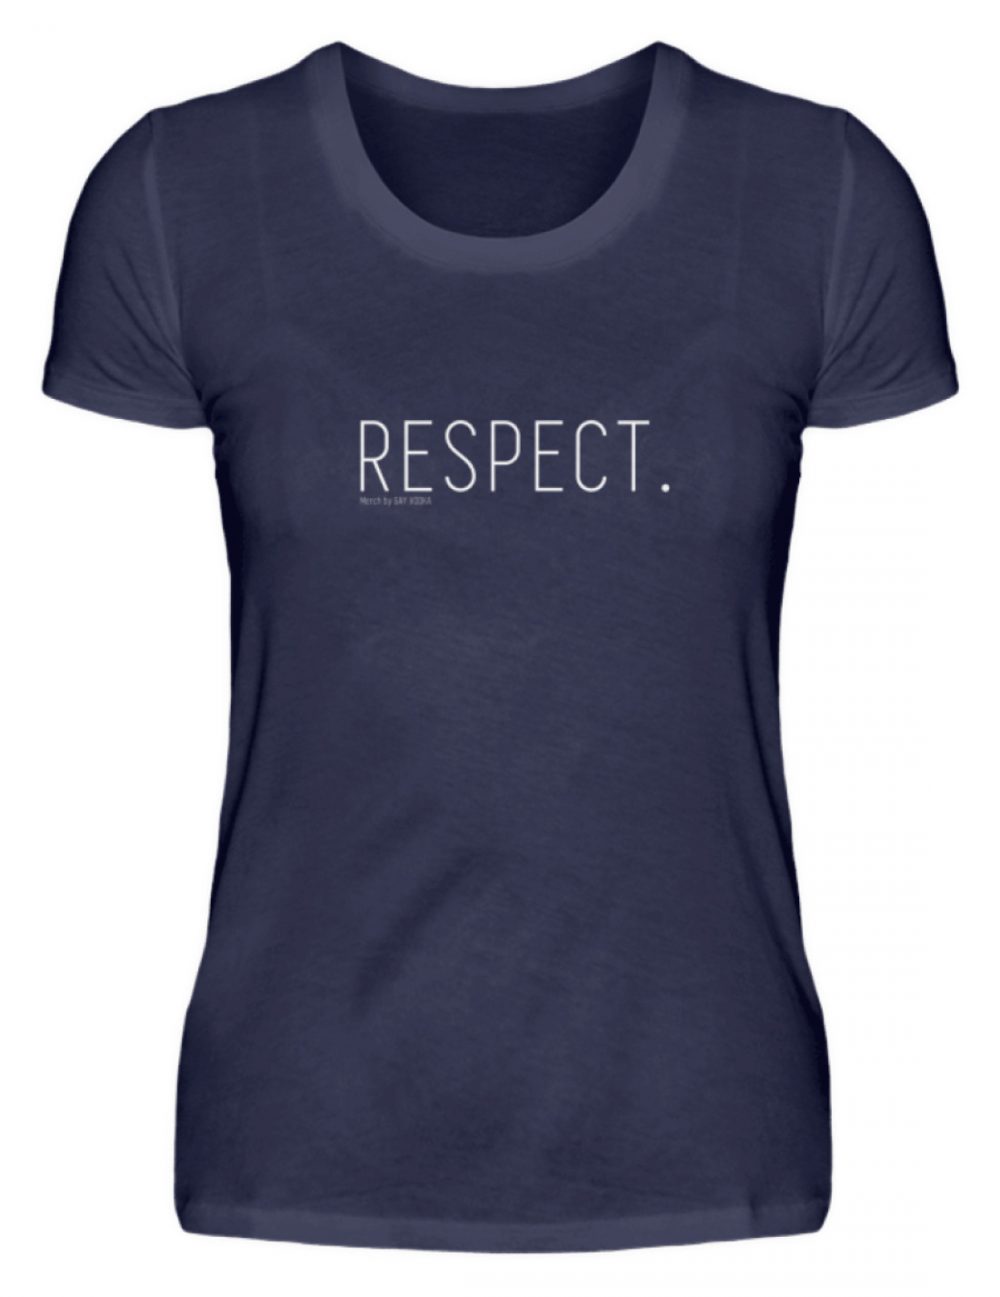 RESPECT. - Damen Premiumshirt-198